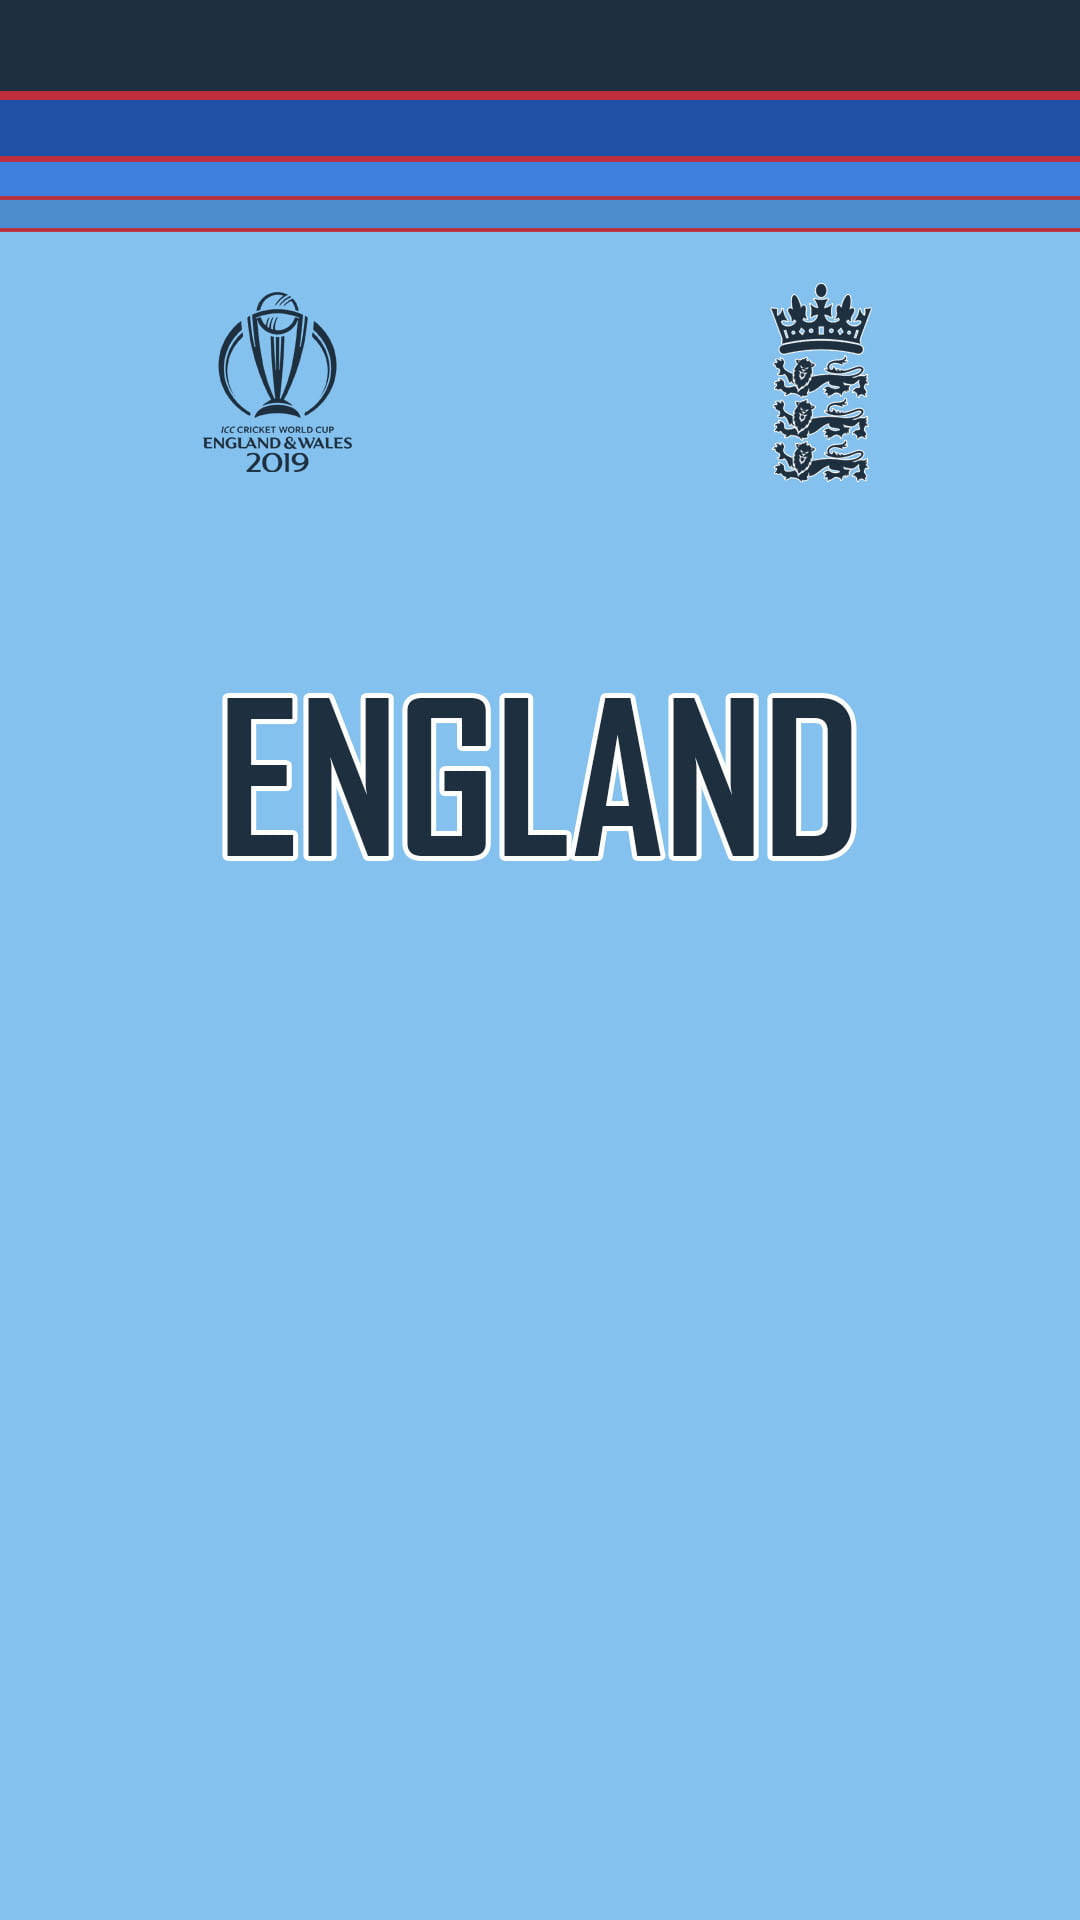 England Cricket Team Logos Background